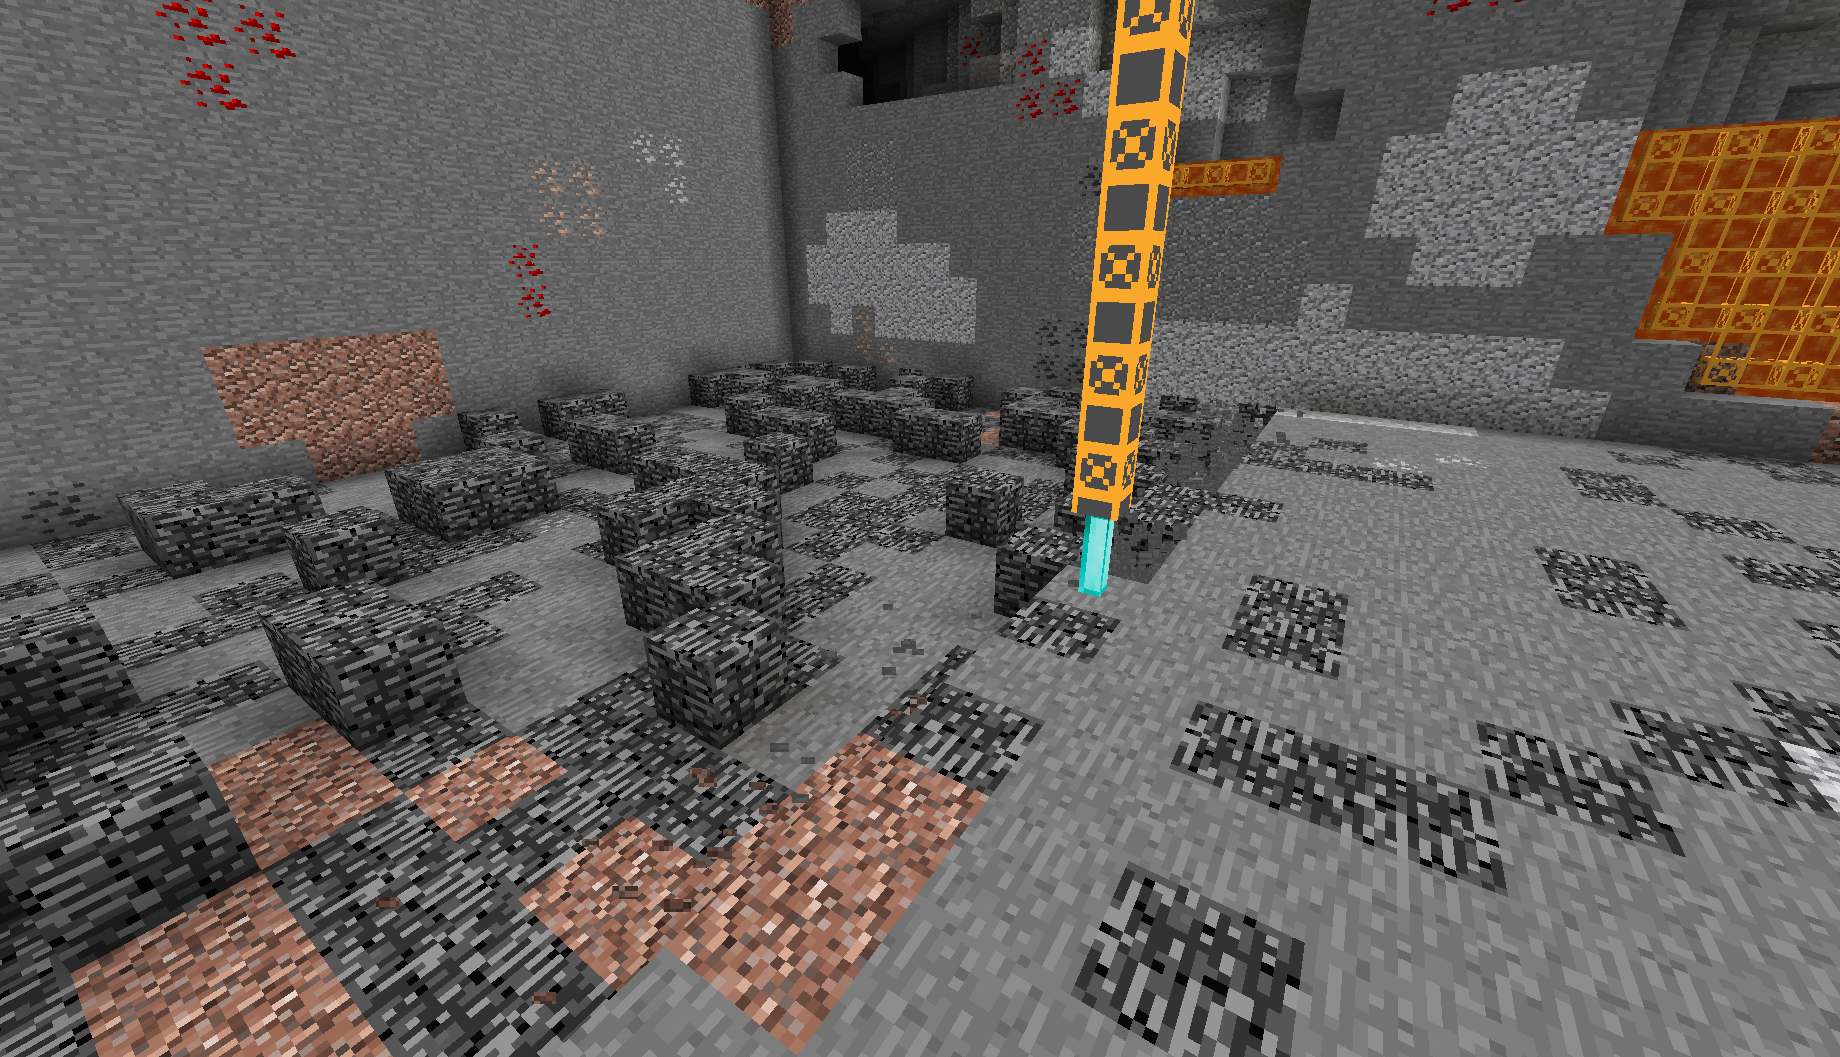 Additional Enchanted Miner screenshot 1